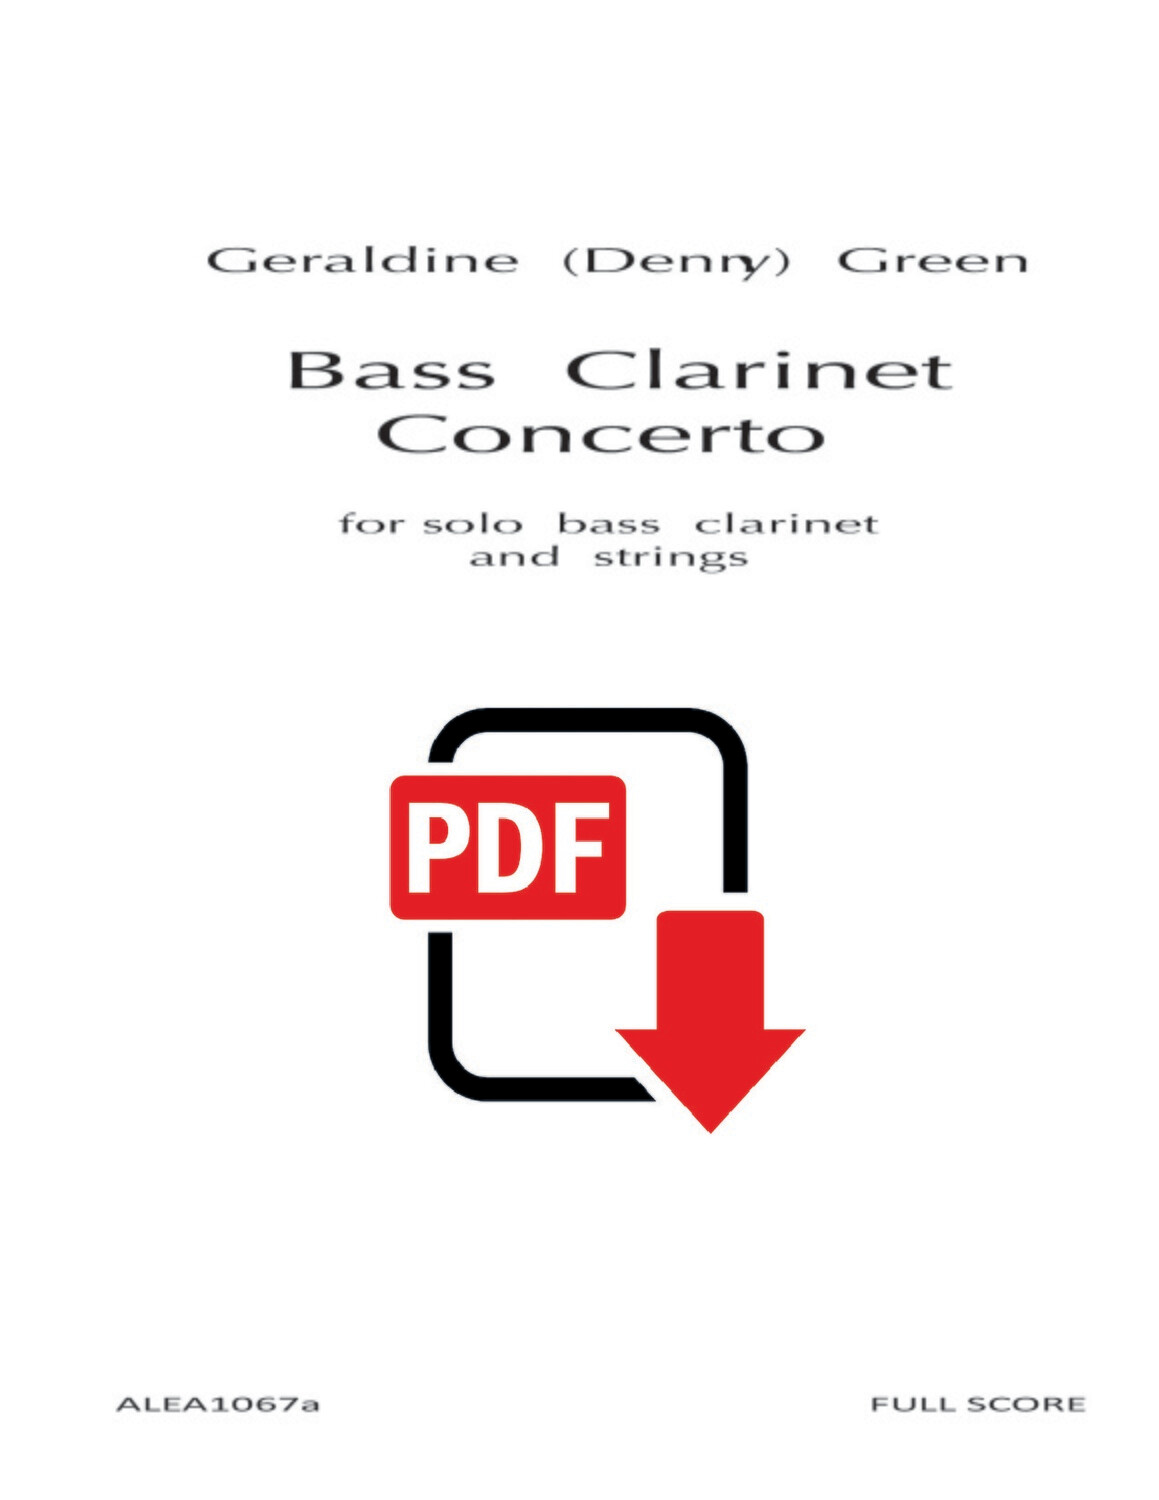 Green: Bass Clarinet Concerto (PDF-full score/parts)